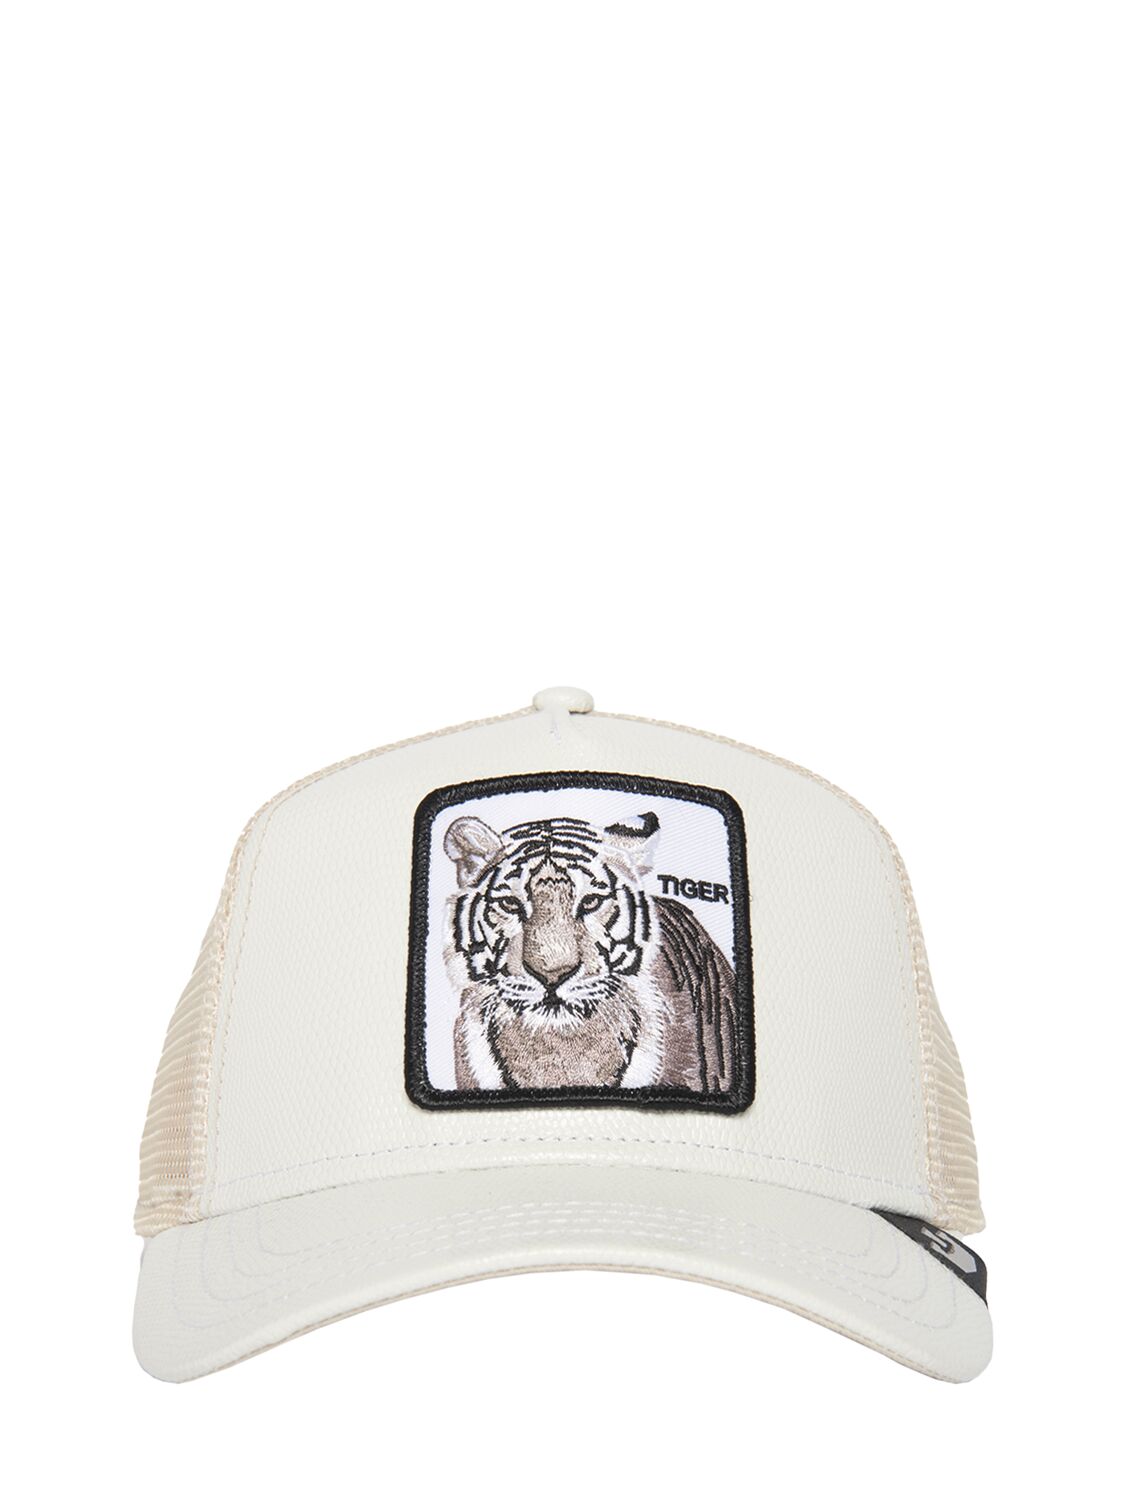 Image of The Killer Tiger Trucker Hat